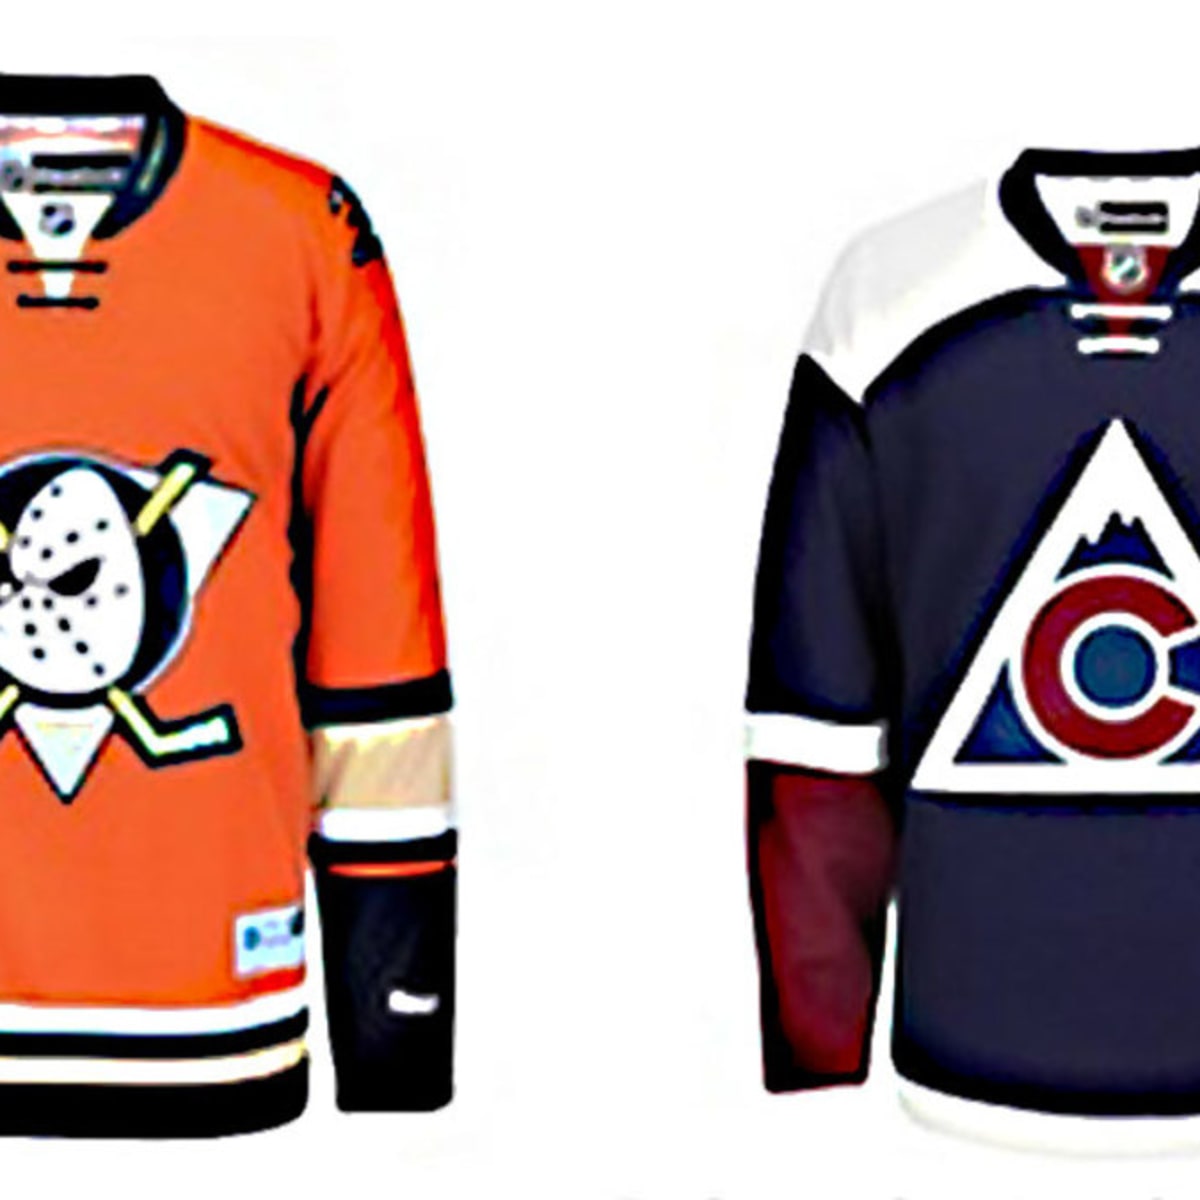 Anaheim Ducks bring back Mighty Ducks logo for third jersey, with